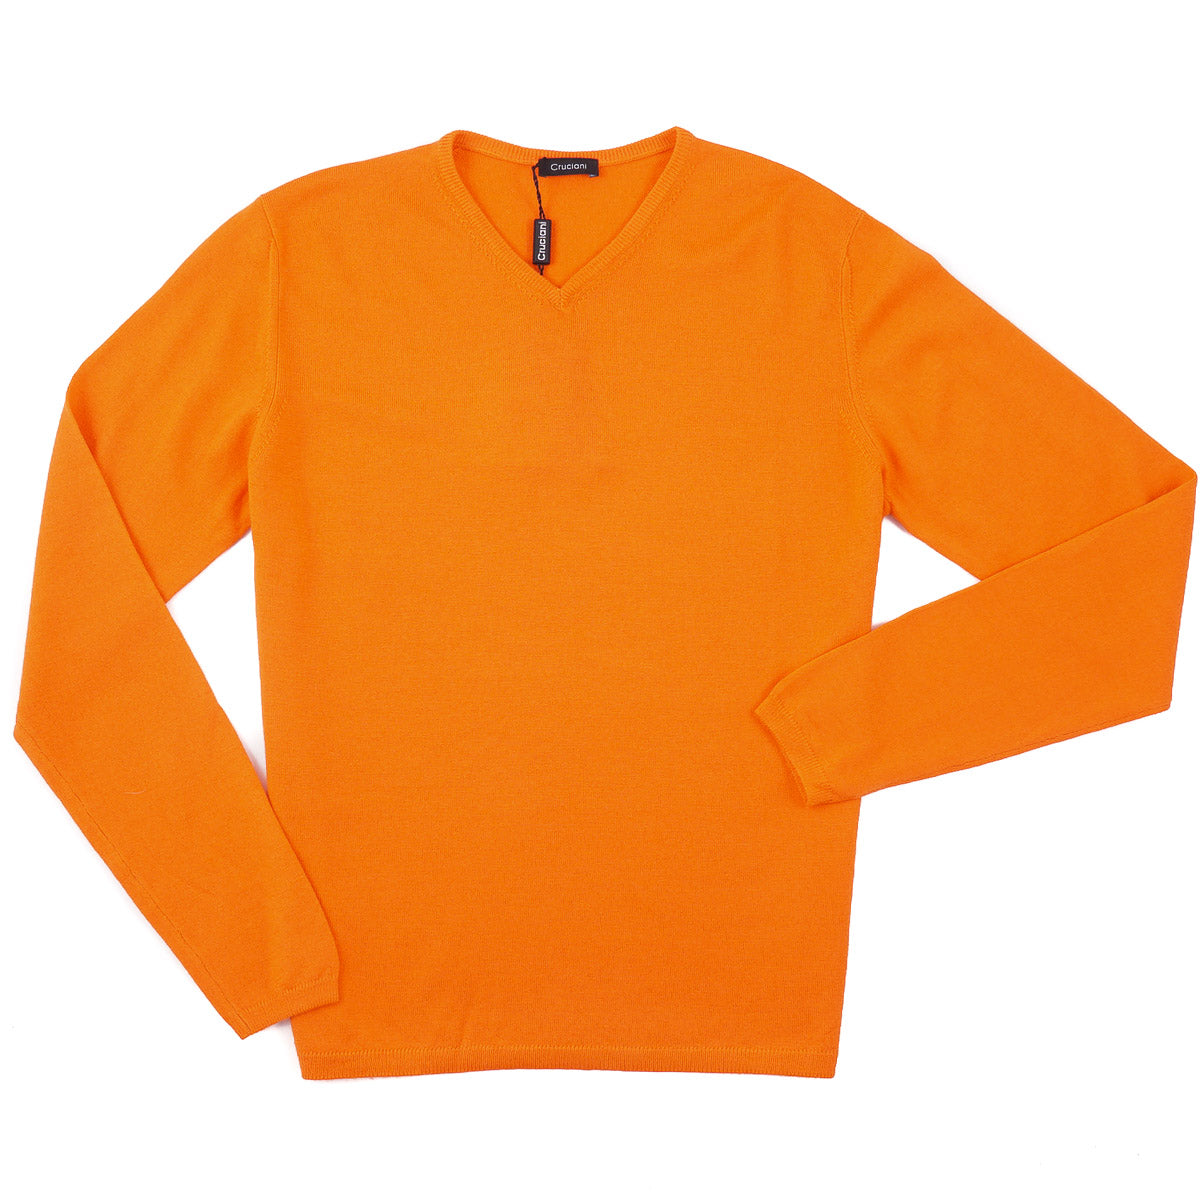 Cruciani Extrafine Merino Wool Sweater - Top Shelf Apparel